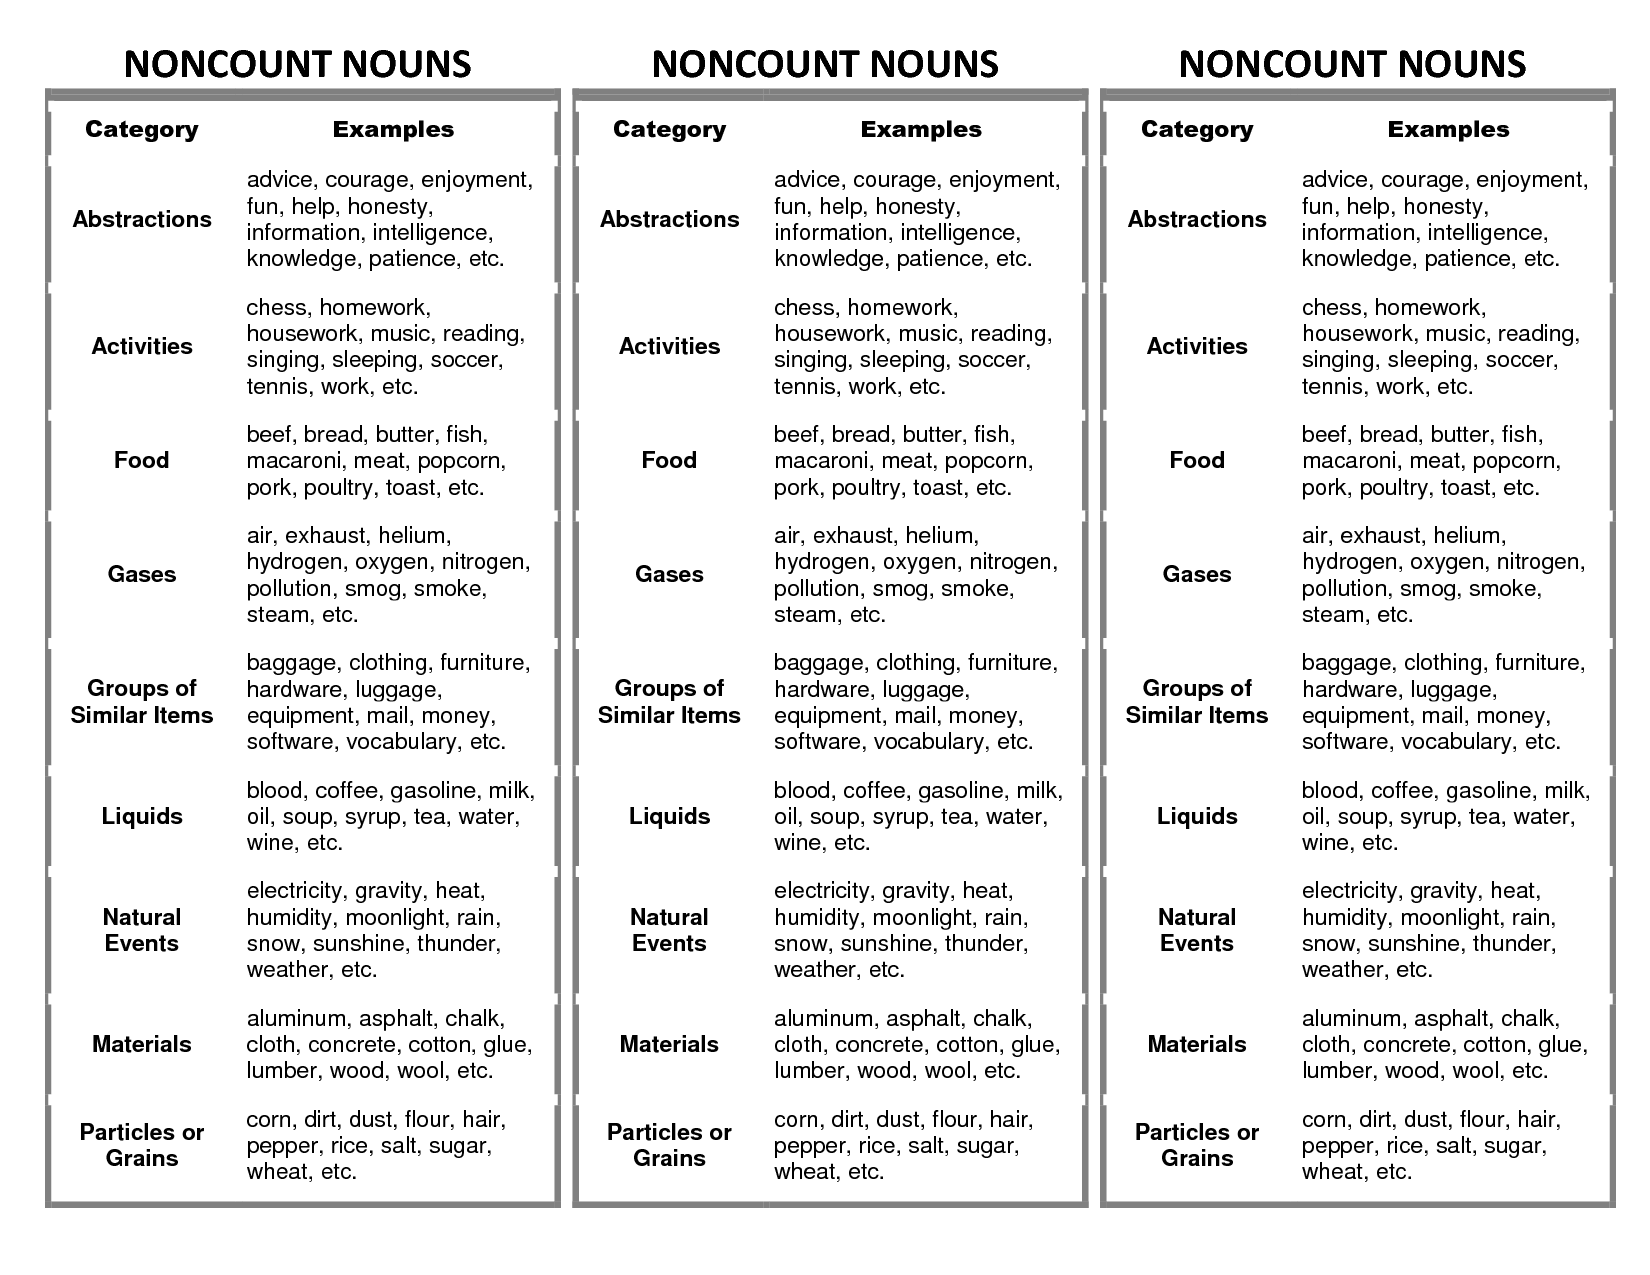 Count Nouns and Non Count Nouns List